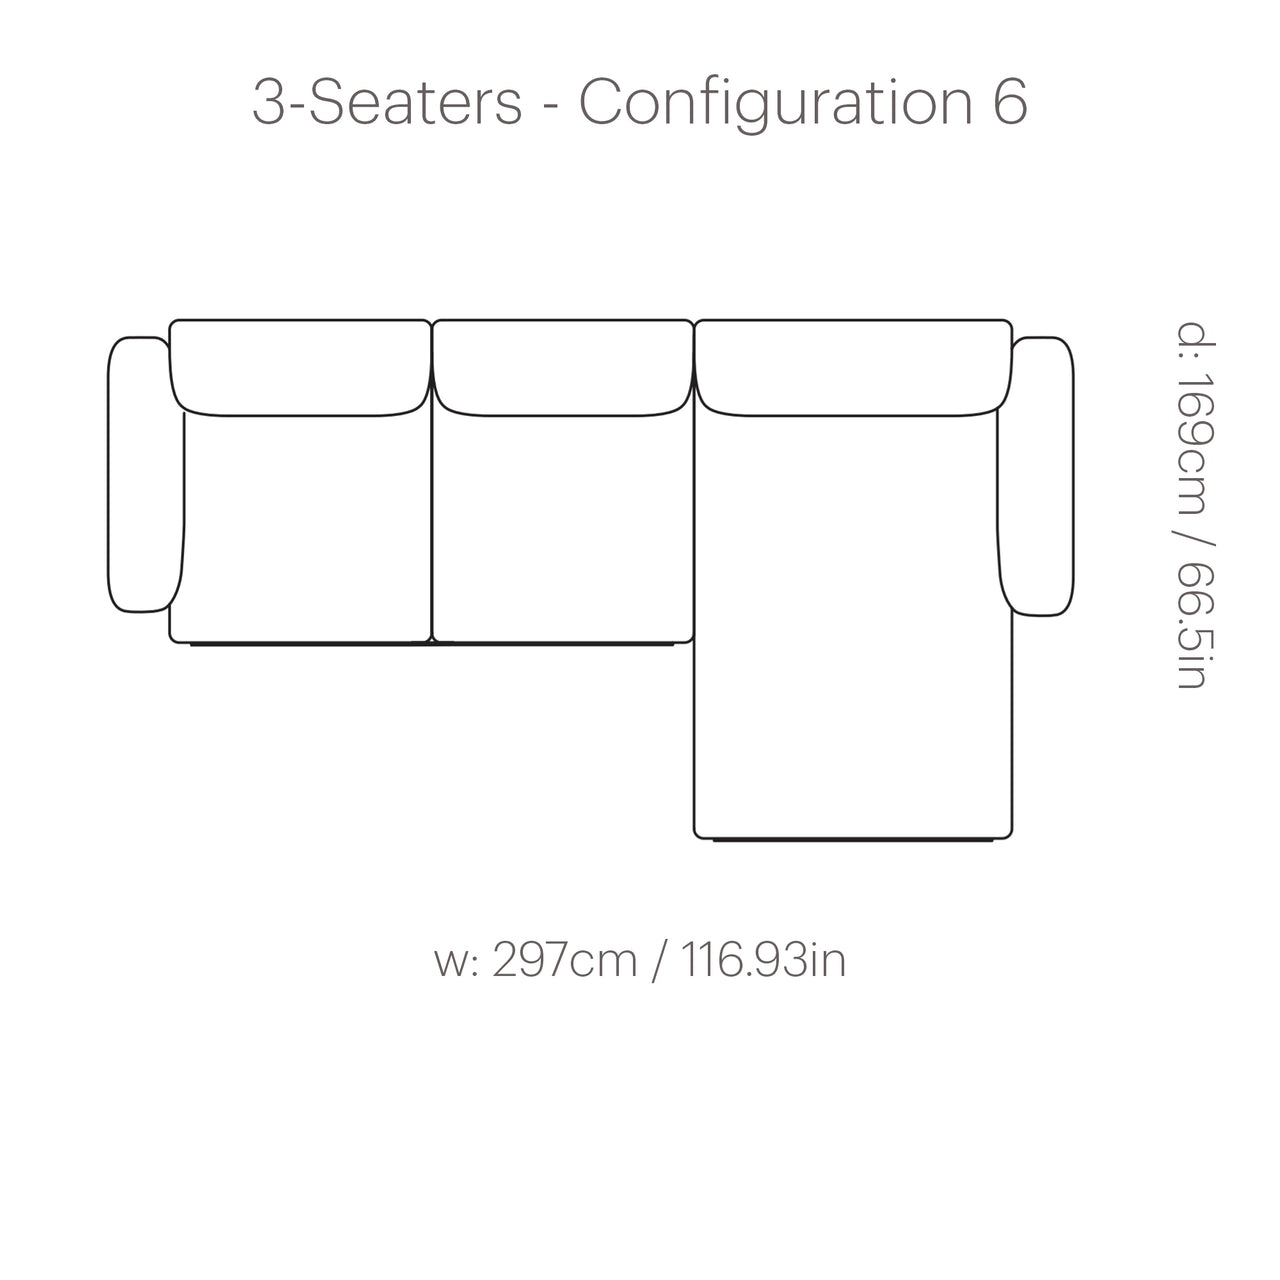 In Situ Modular Sofa: 3 Seater + Configuration 6